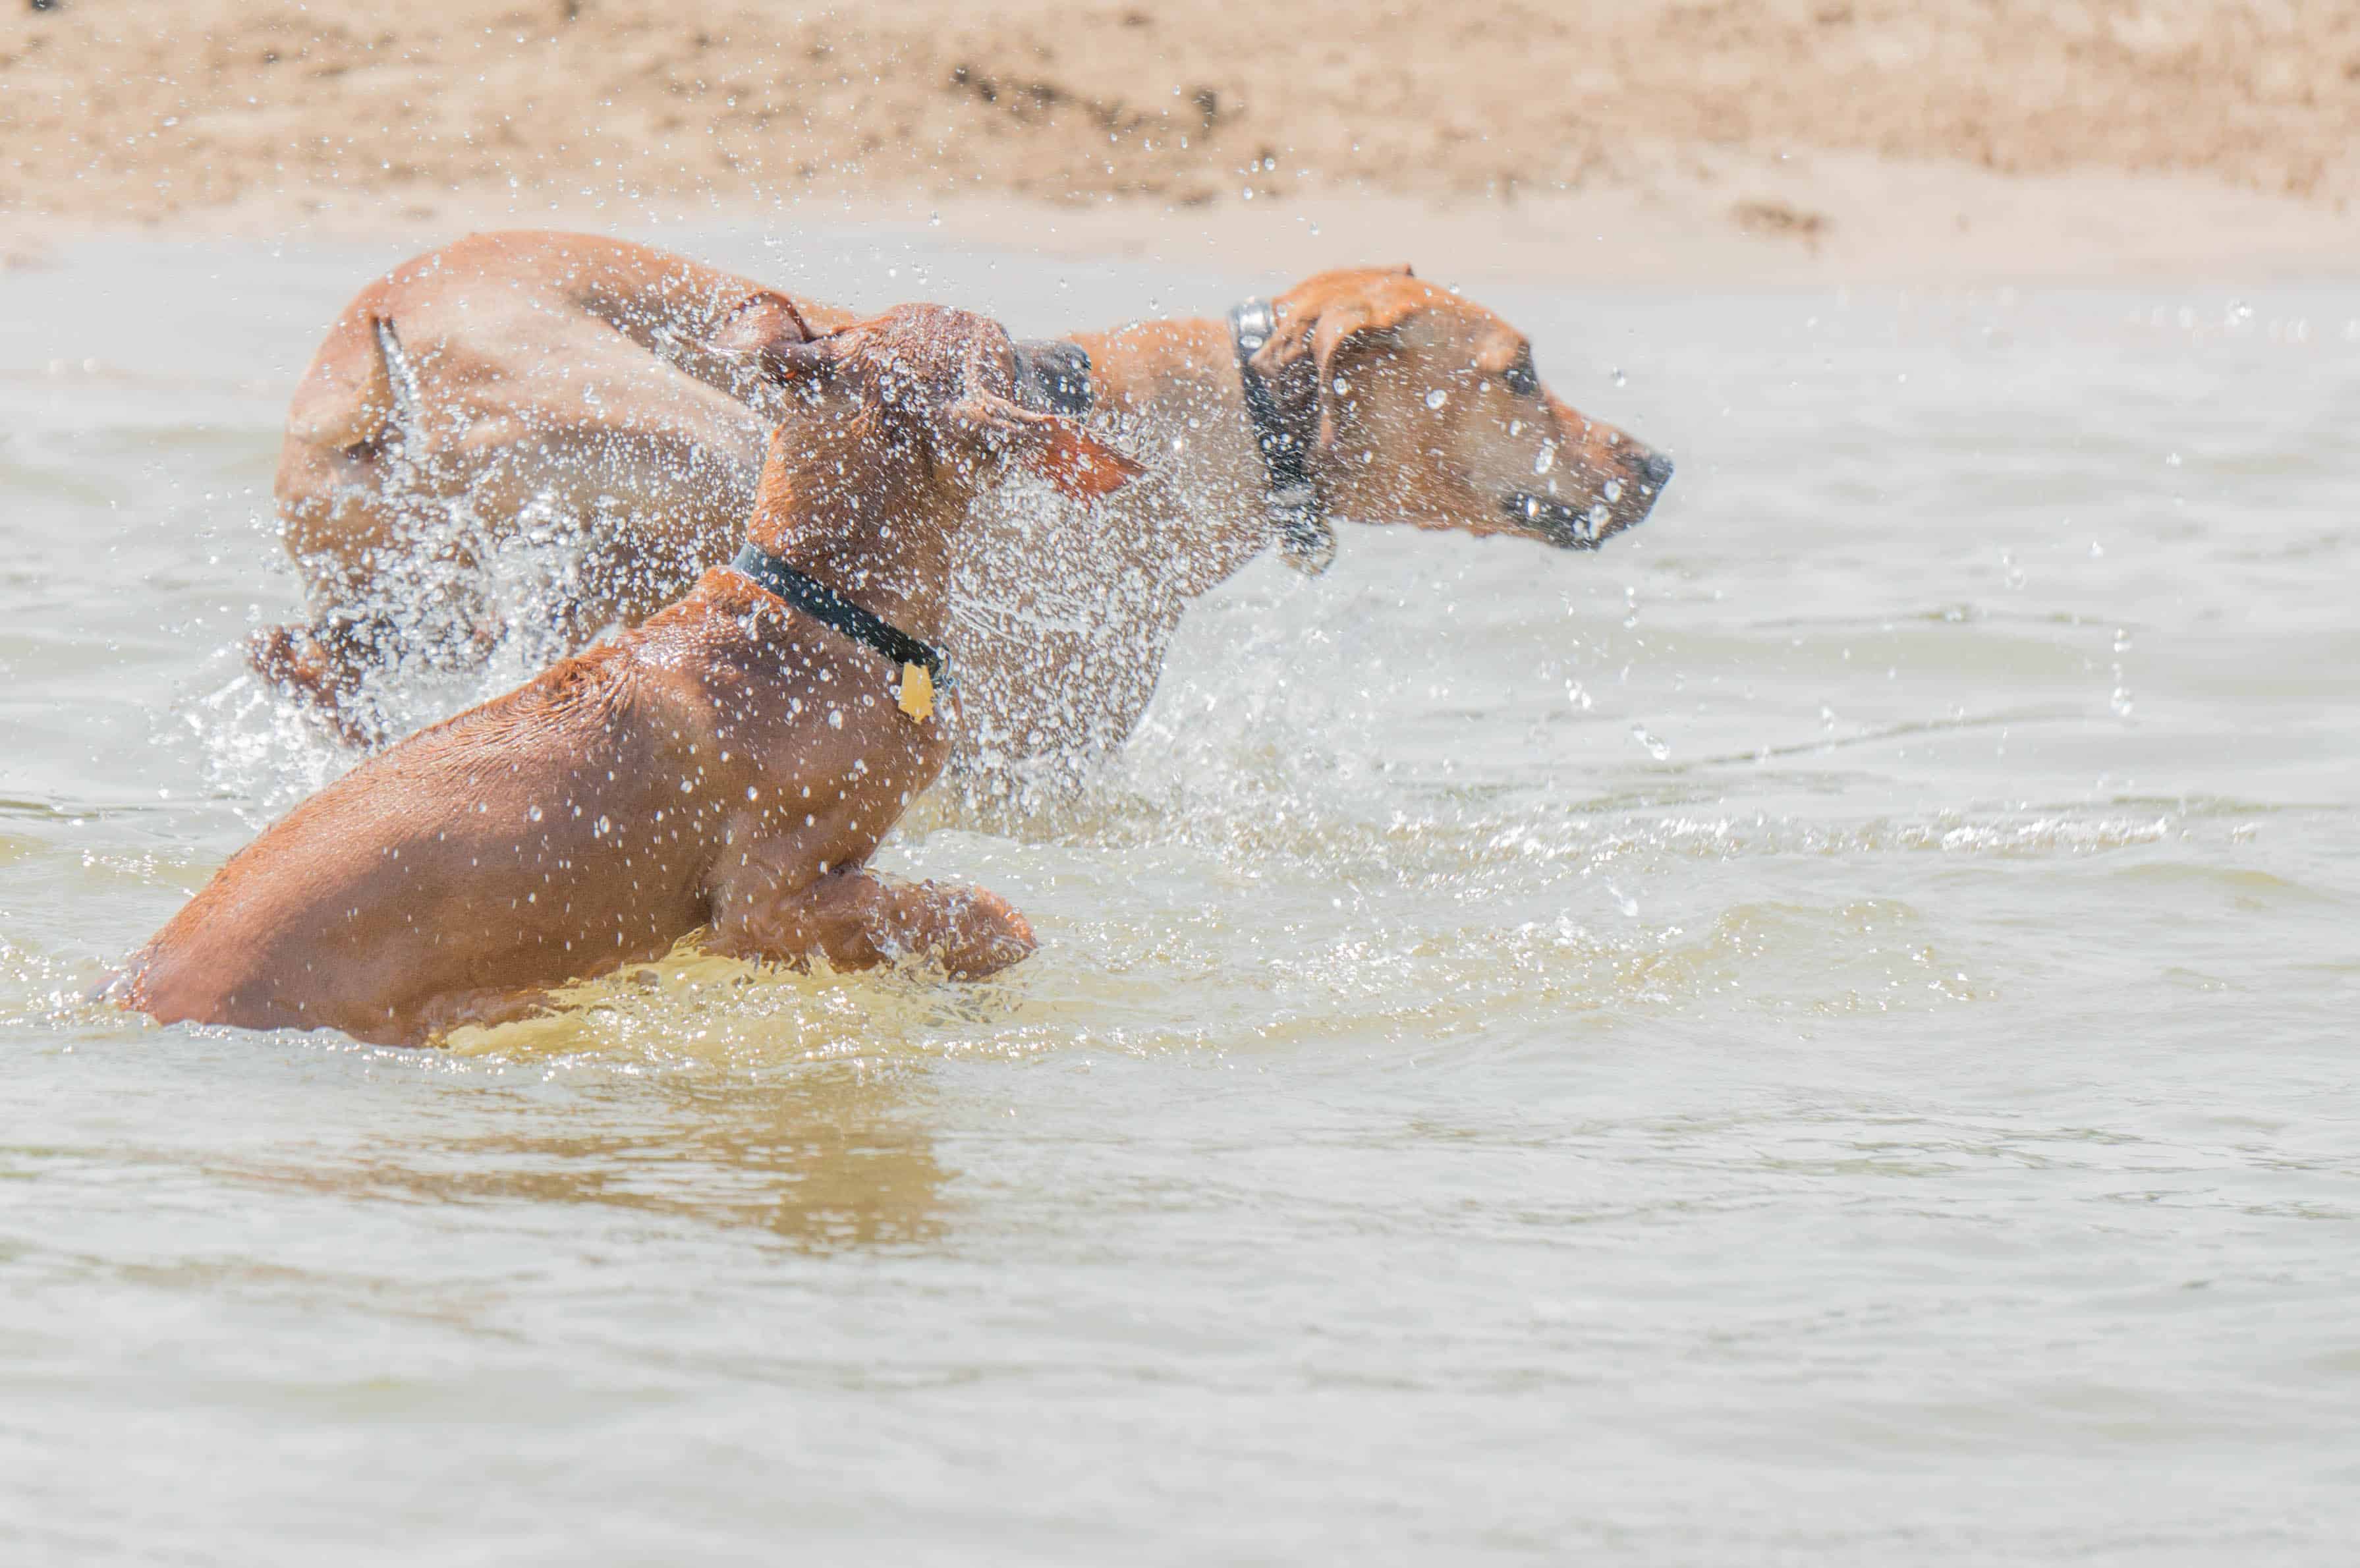 Rhodesian Ridgeback, puppy, dog beach, dog friendly beach, chicago, montrose beach. adventure, marking our territory